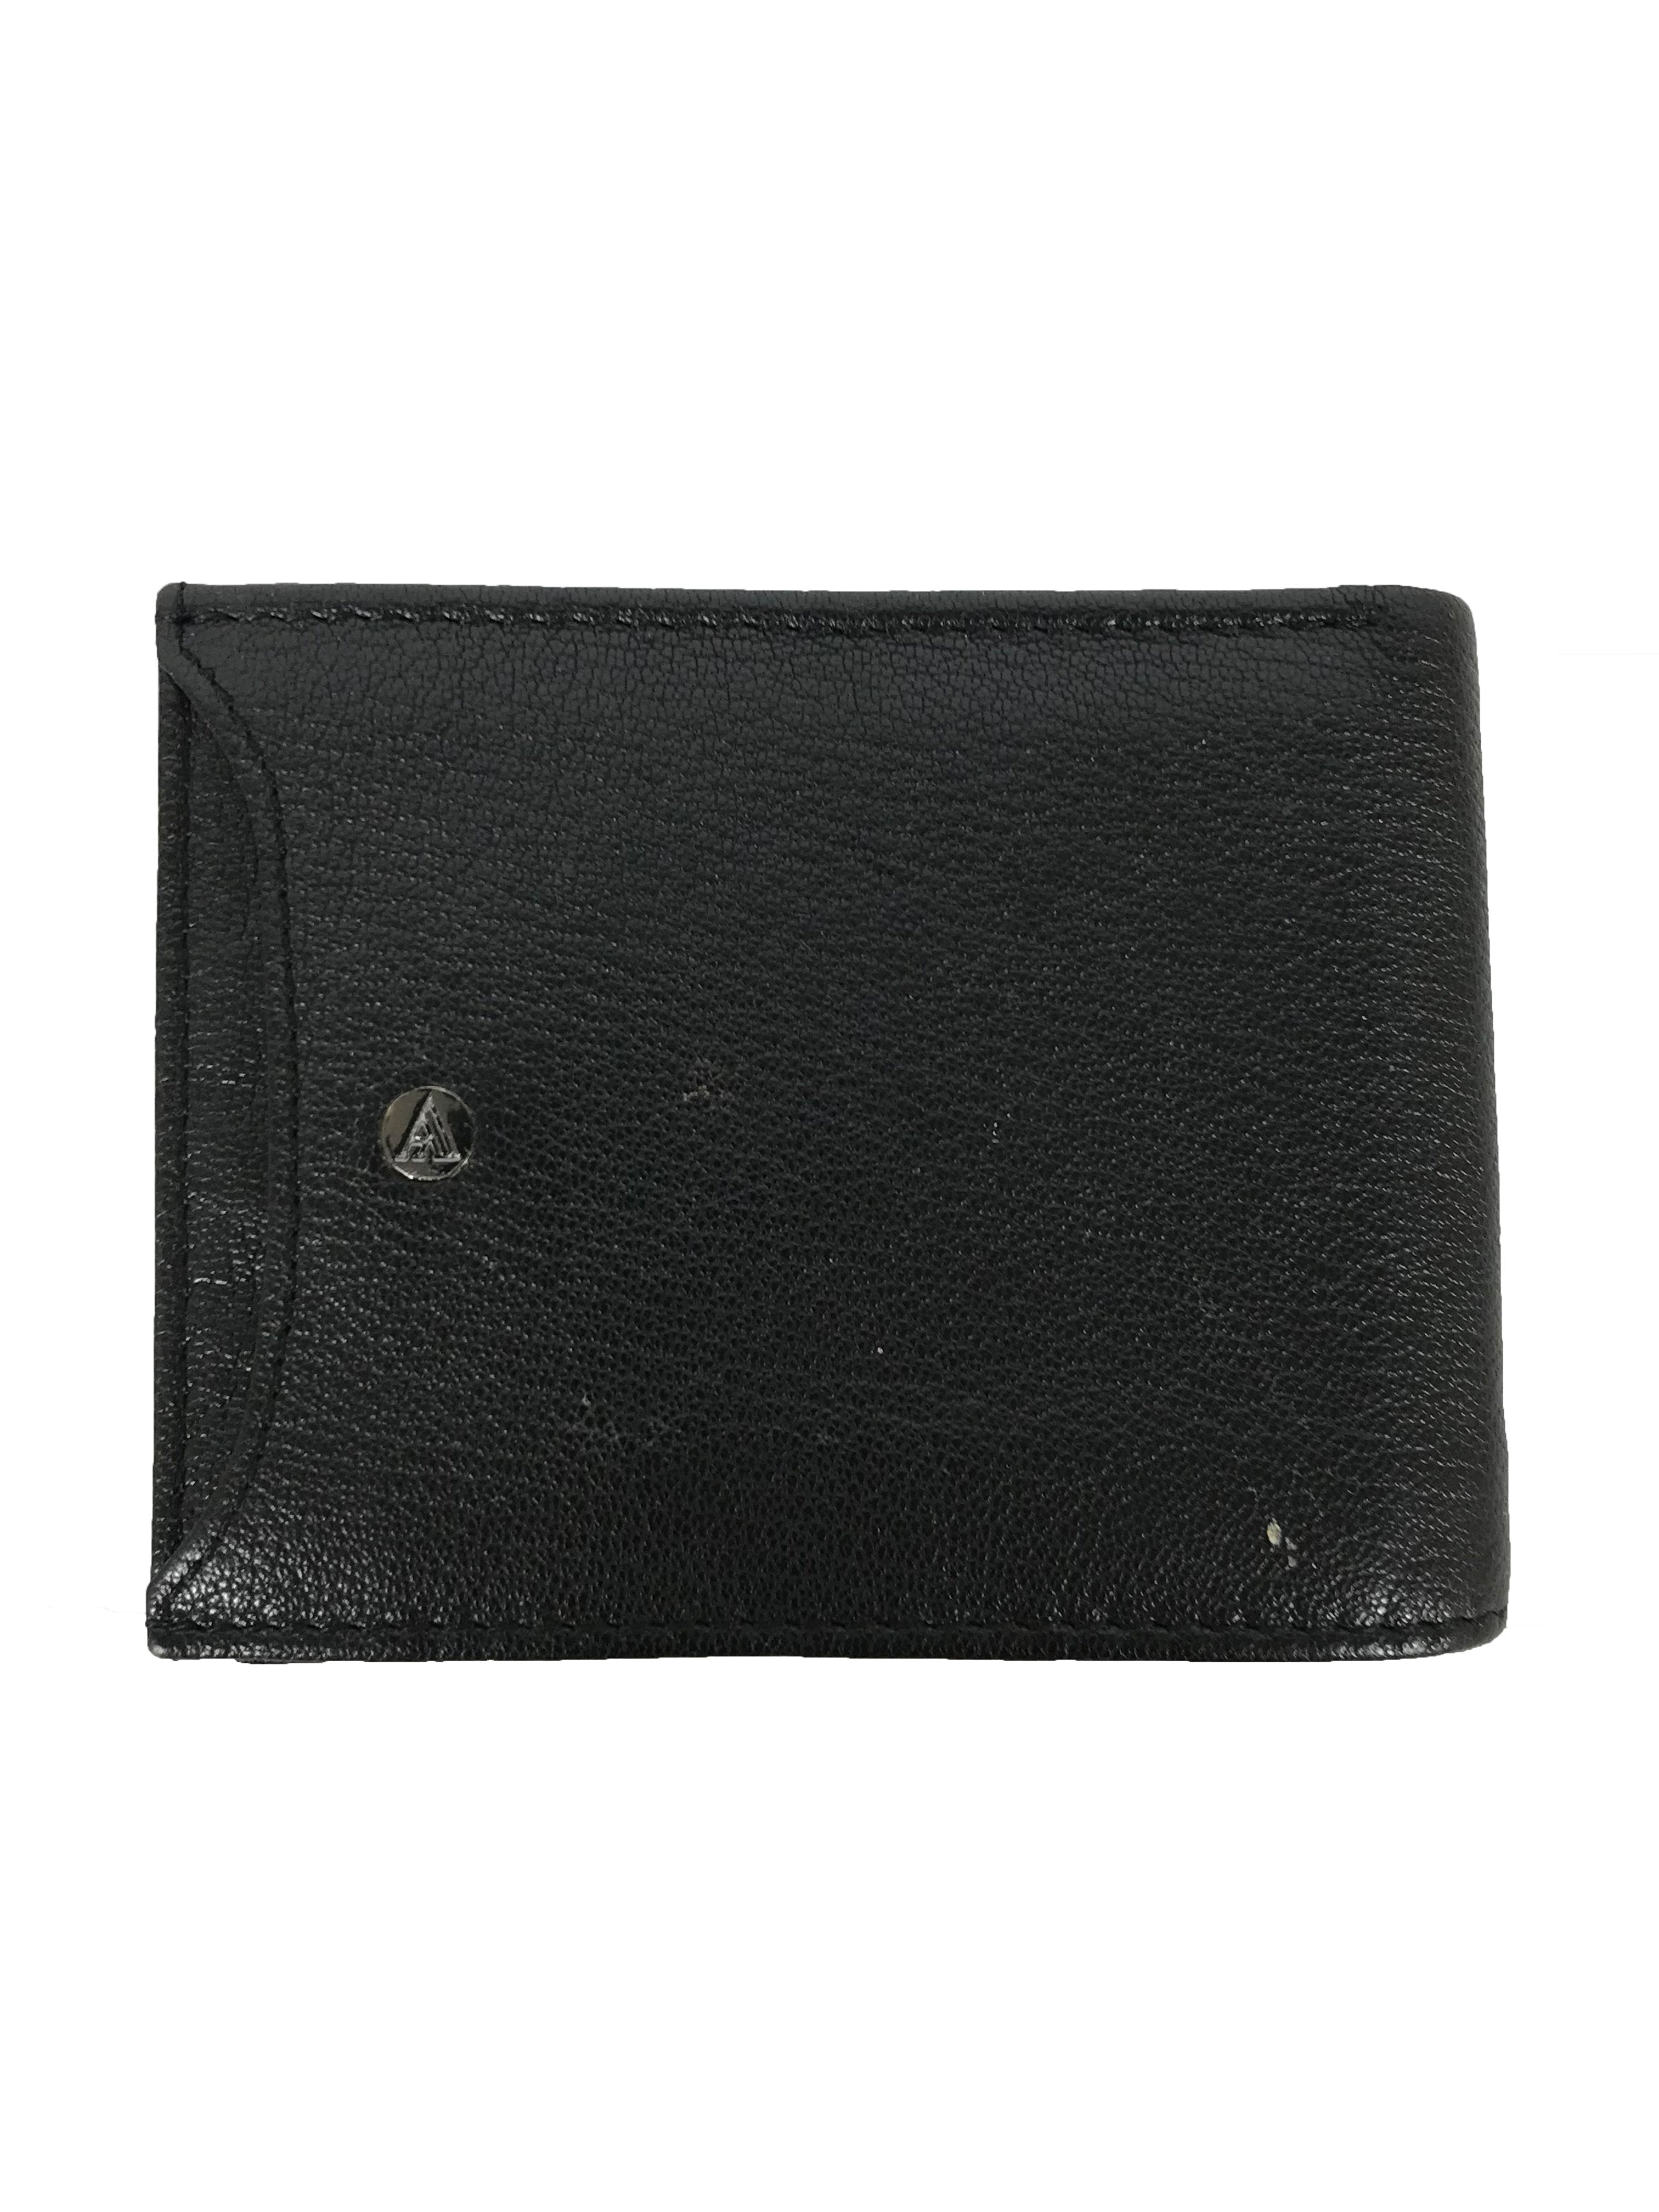 Van Heusen Black Leather Bi-Fold Wallet